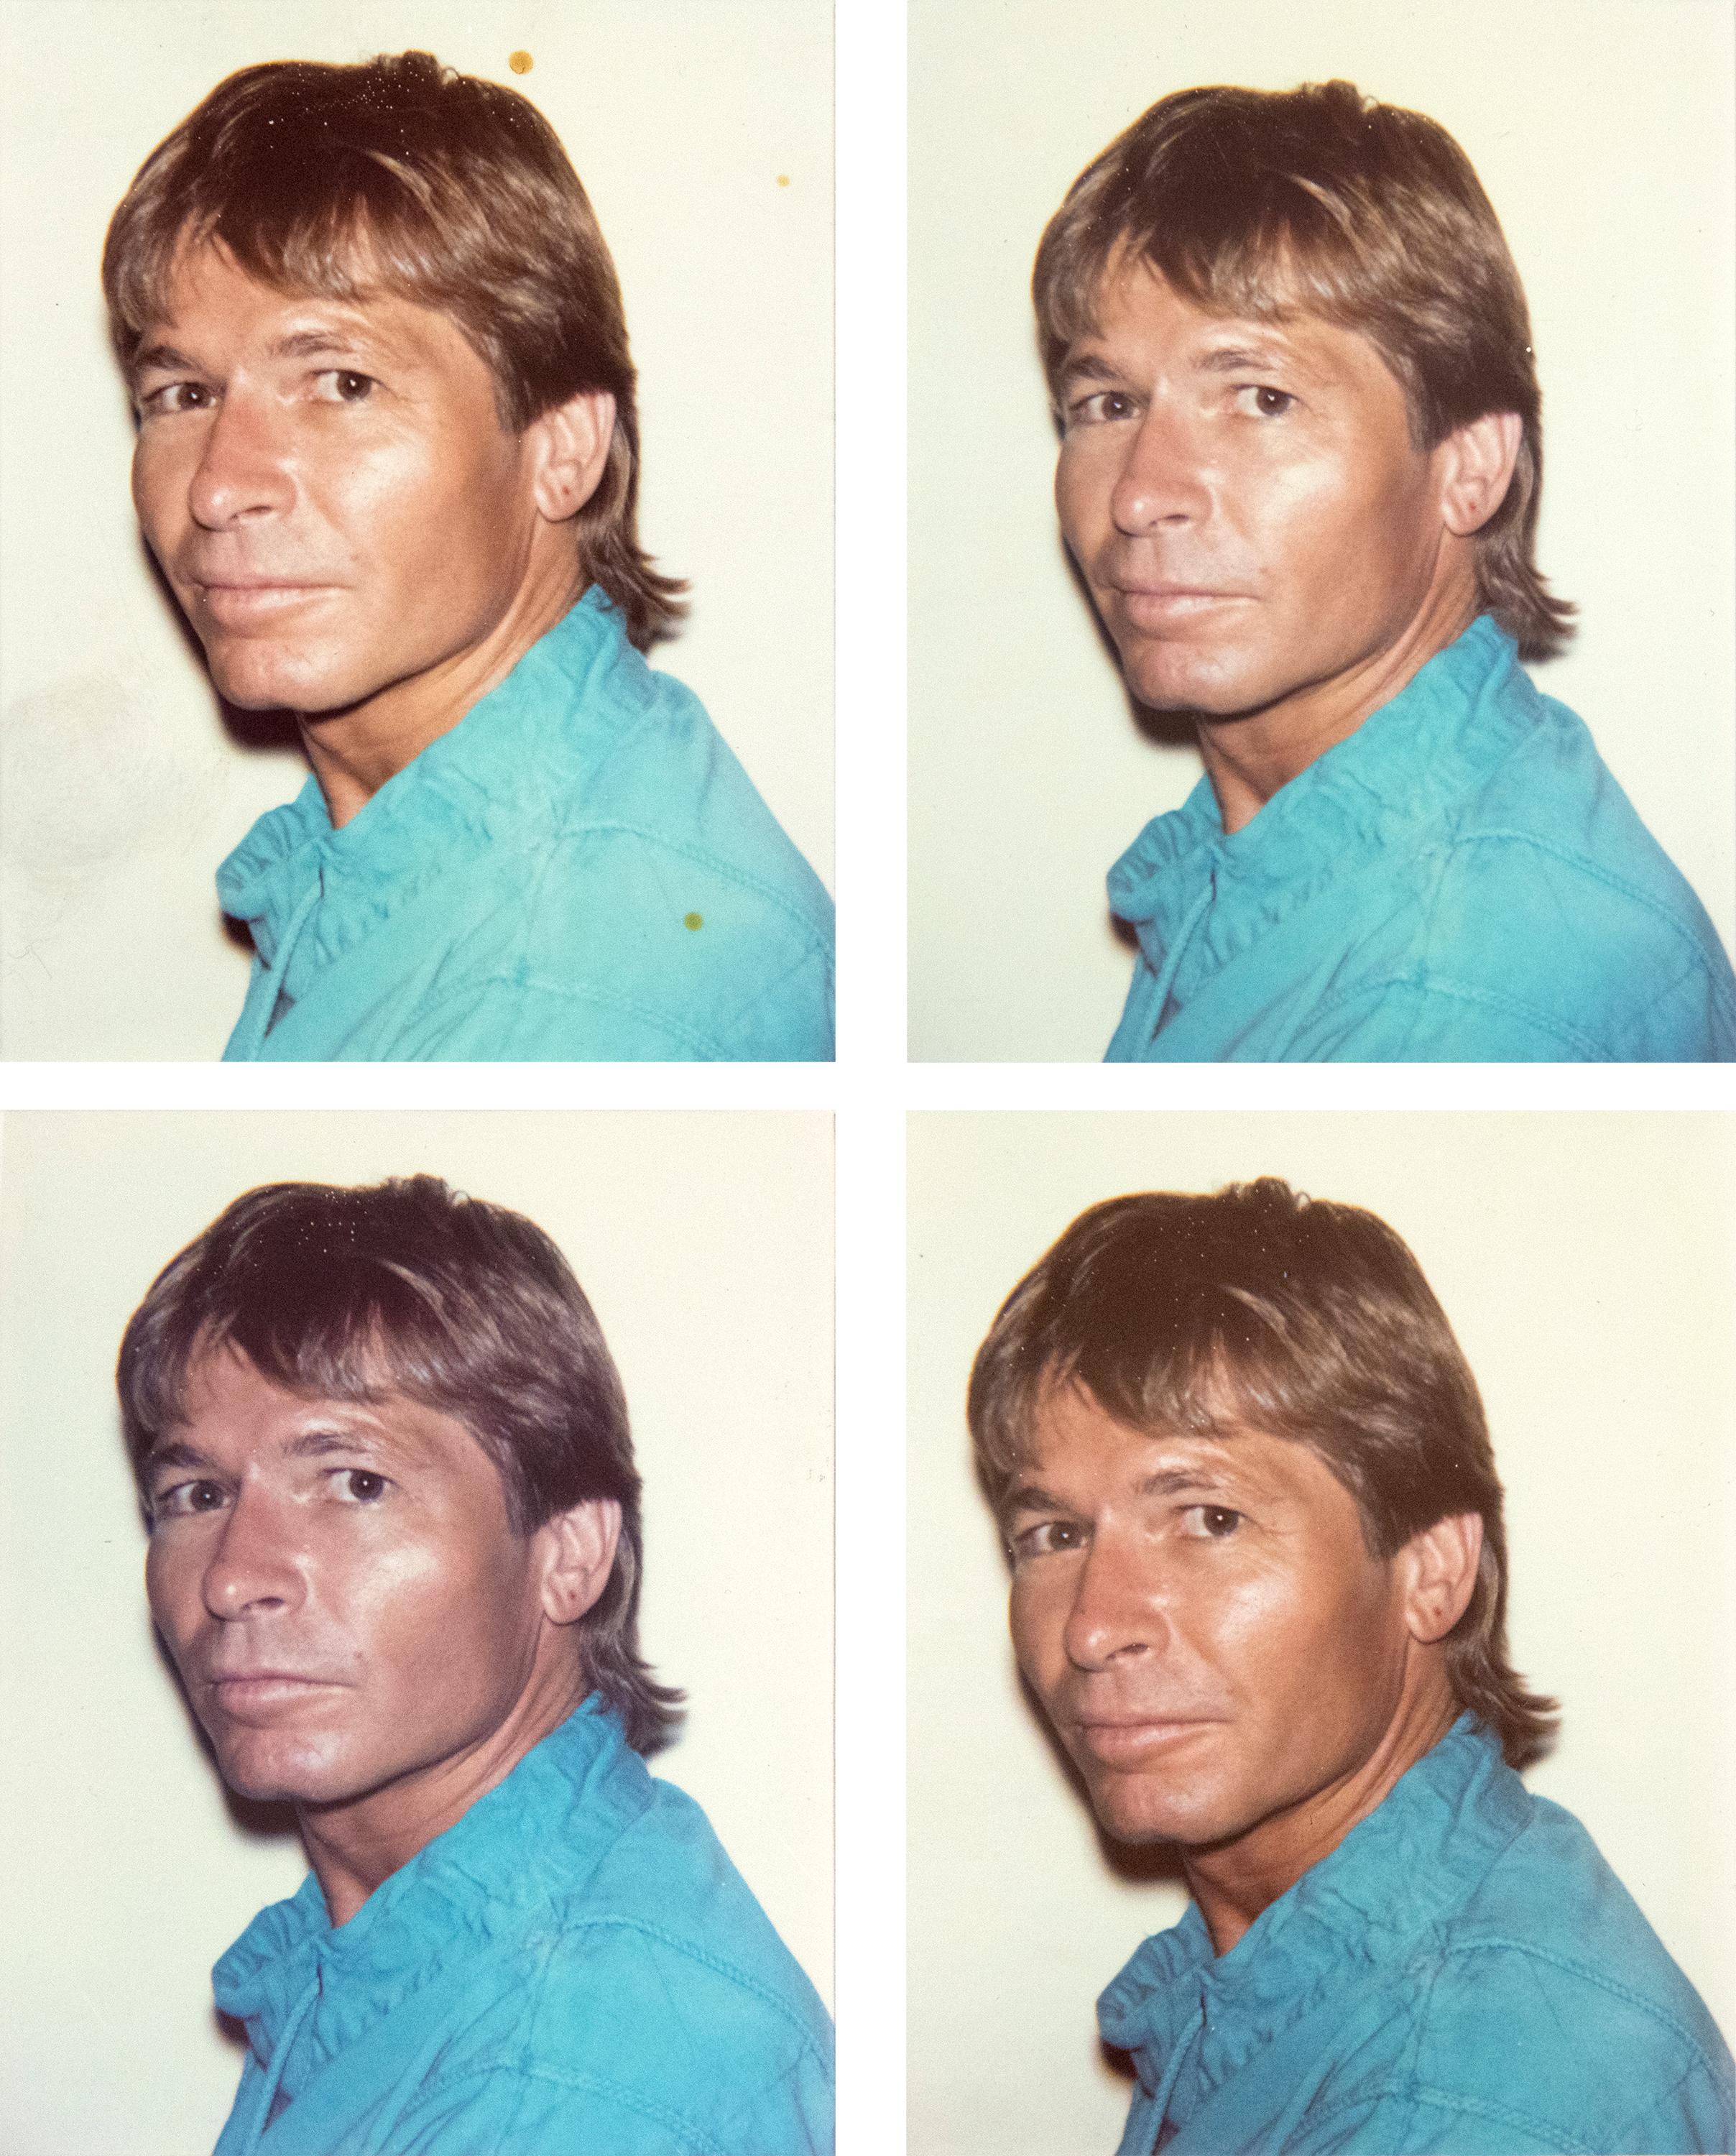 Andy Warhol Portrait Photograph – John Denver